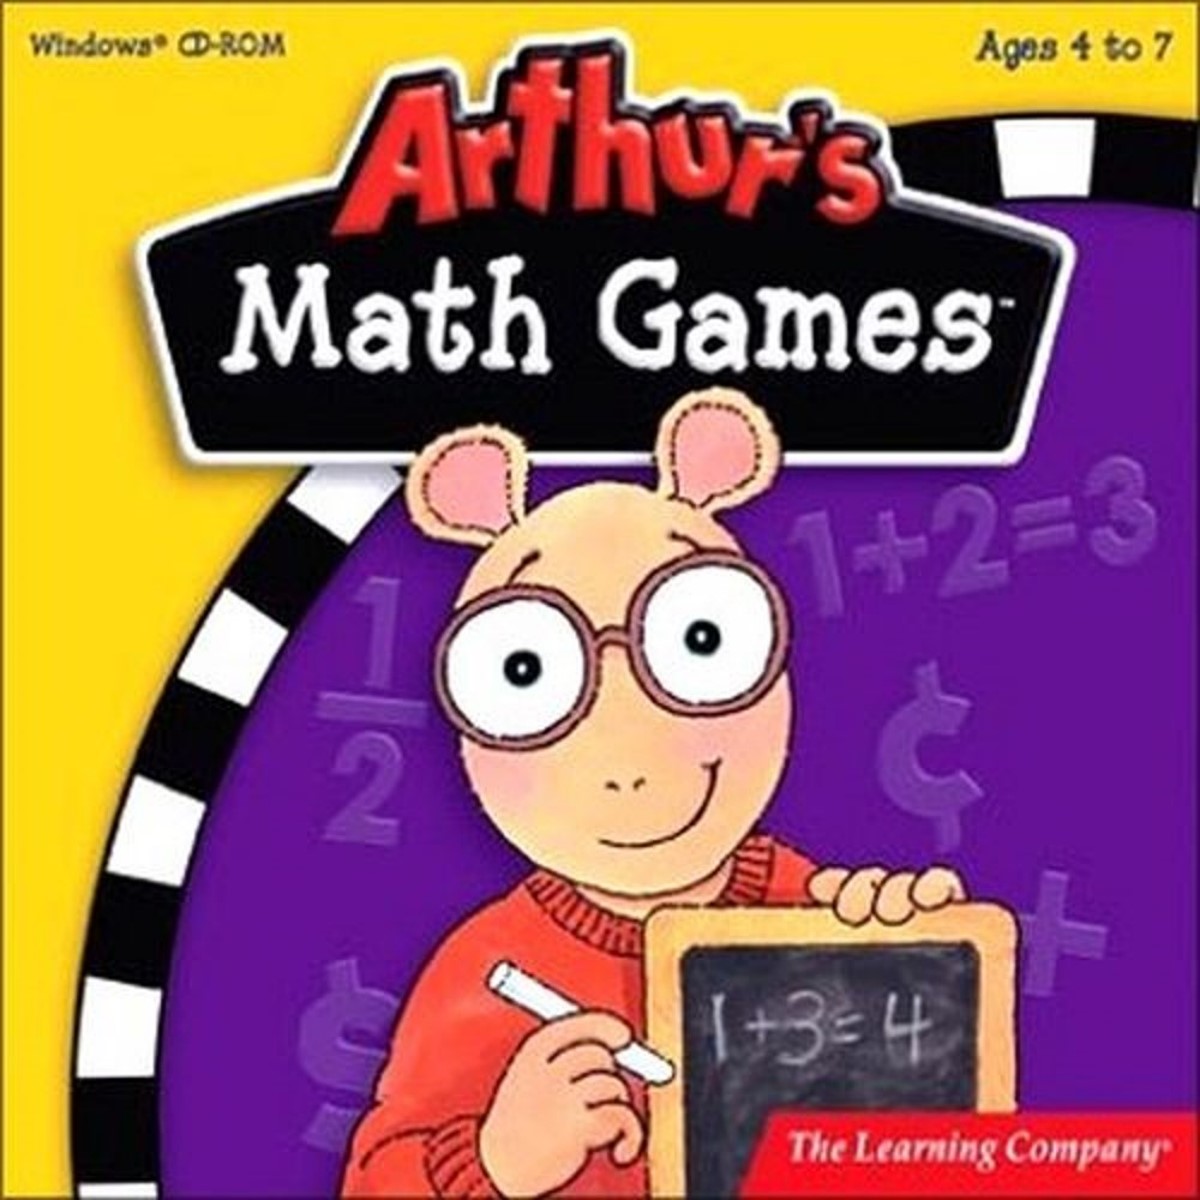 Arthur"s Math Games - image 1 of 5